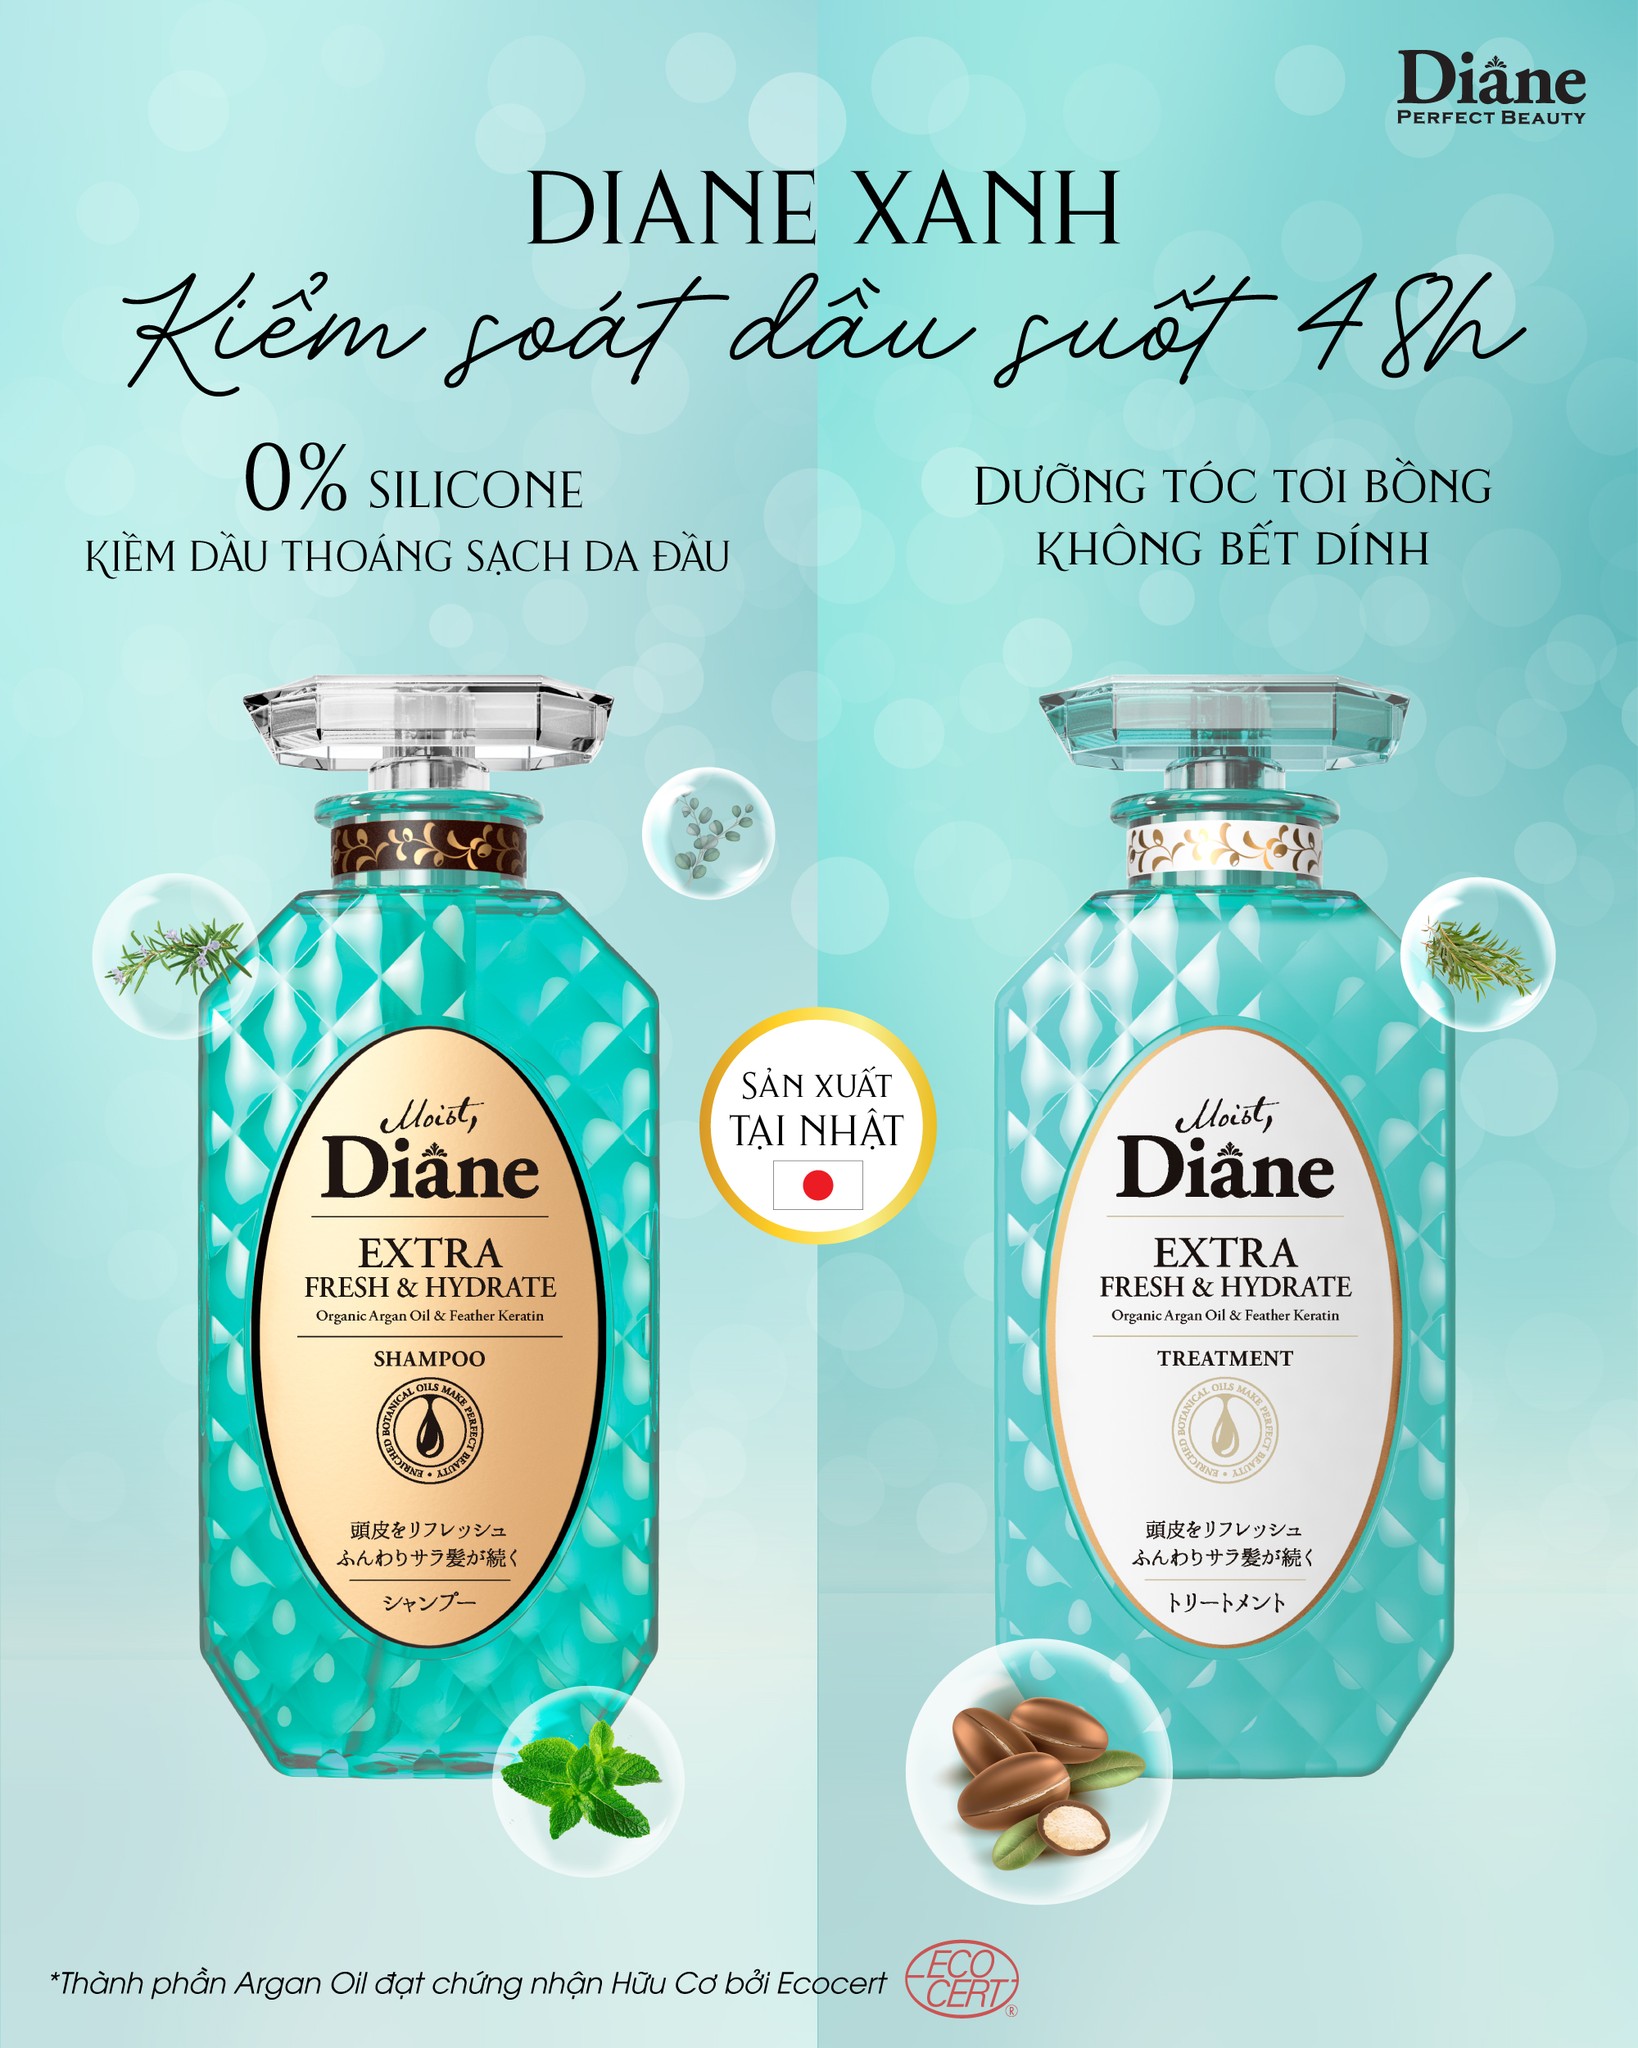 Dầu gội  kiểm soát dầu Moist Diane Extra Fresh & Hydrate (450ml)